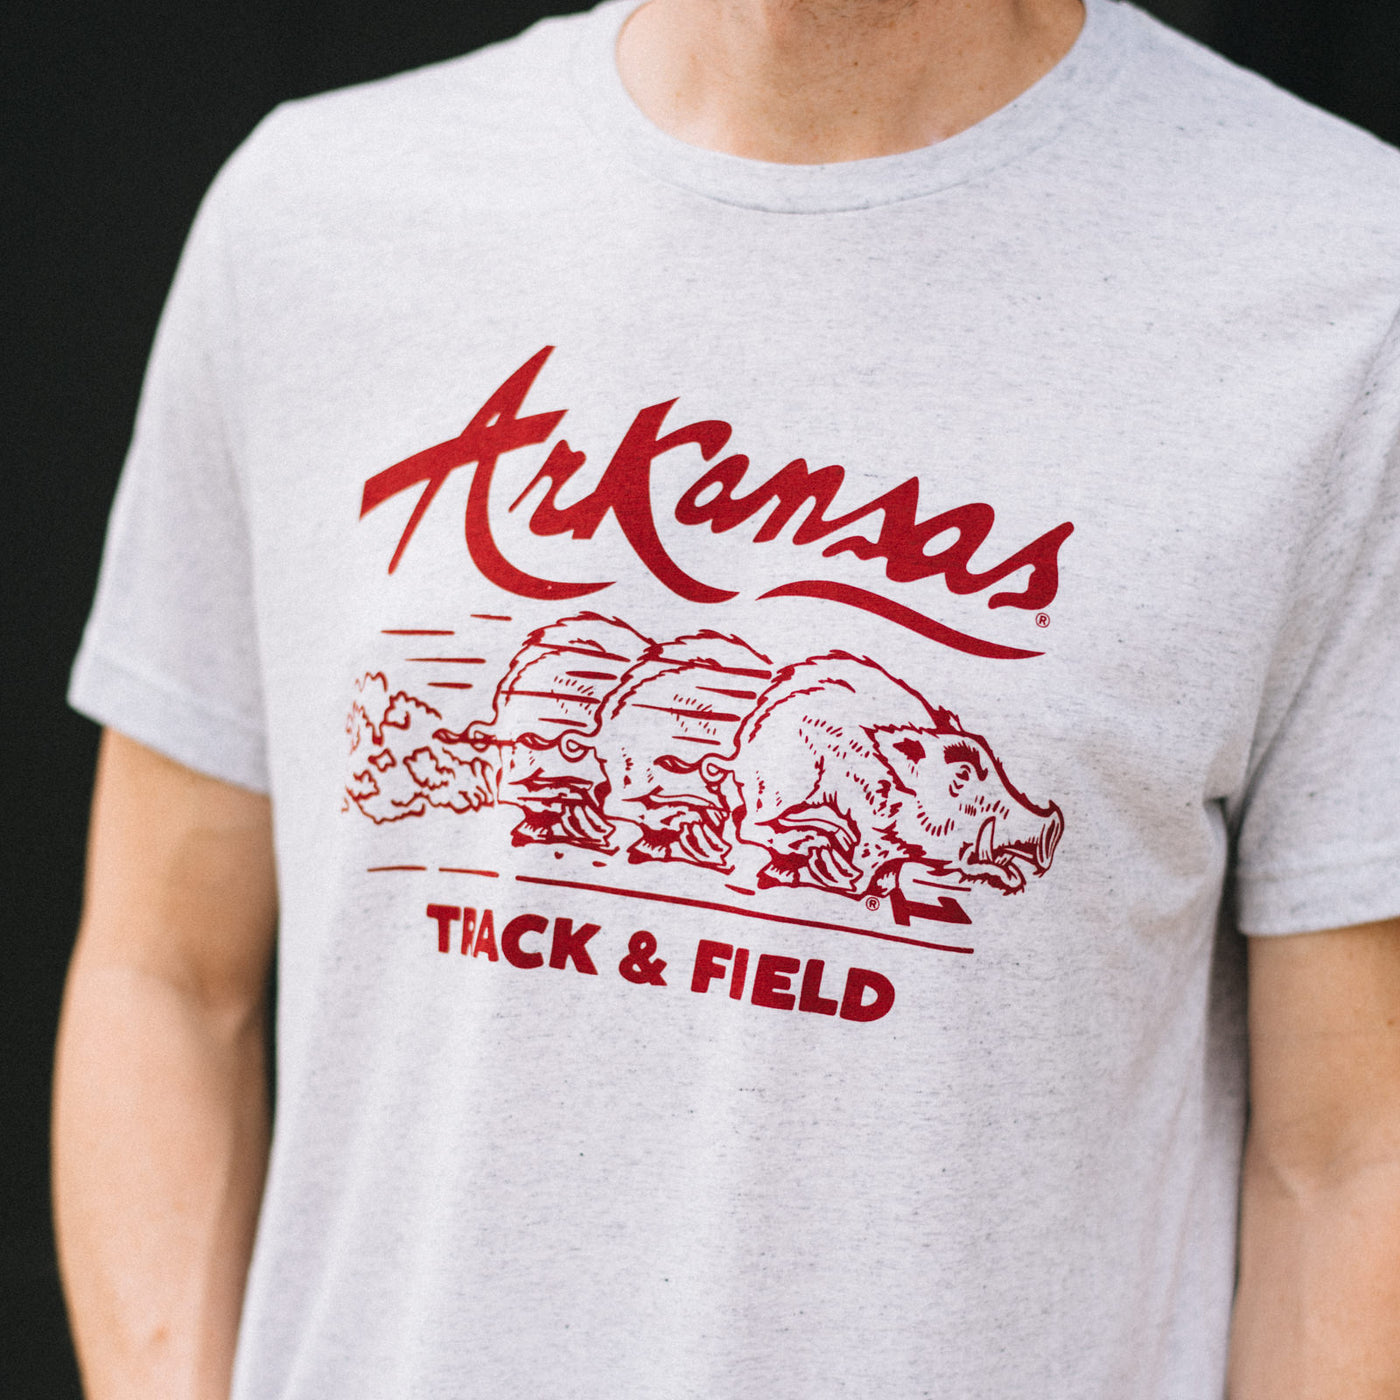 Vintage Arkansas Track and Field Shirt